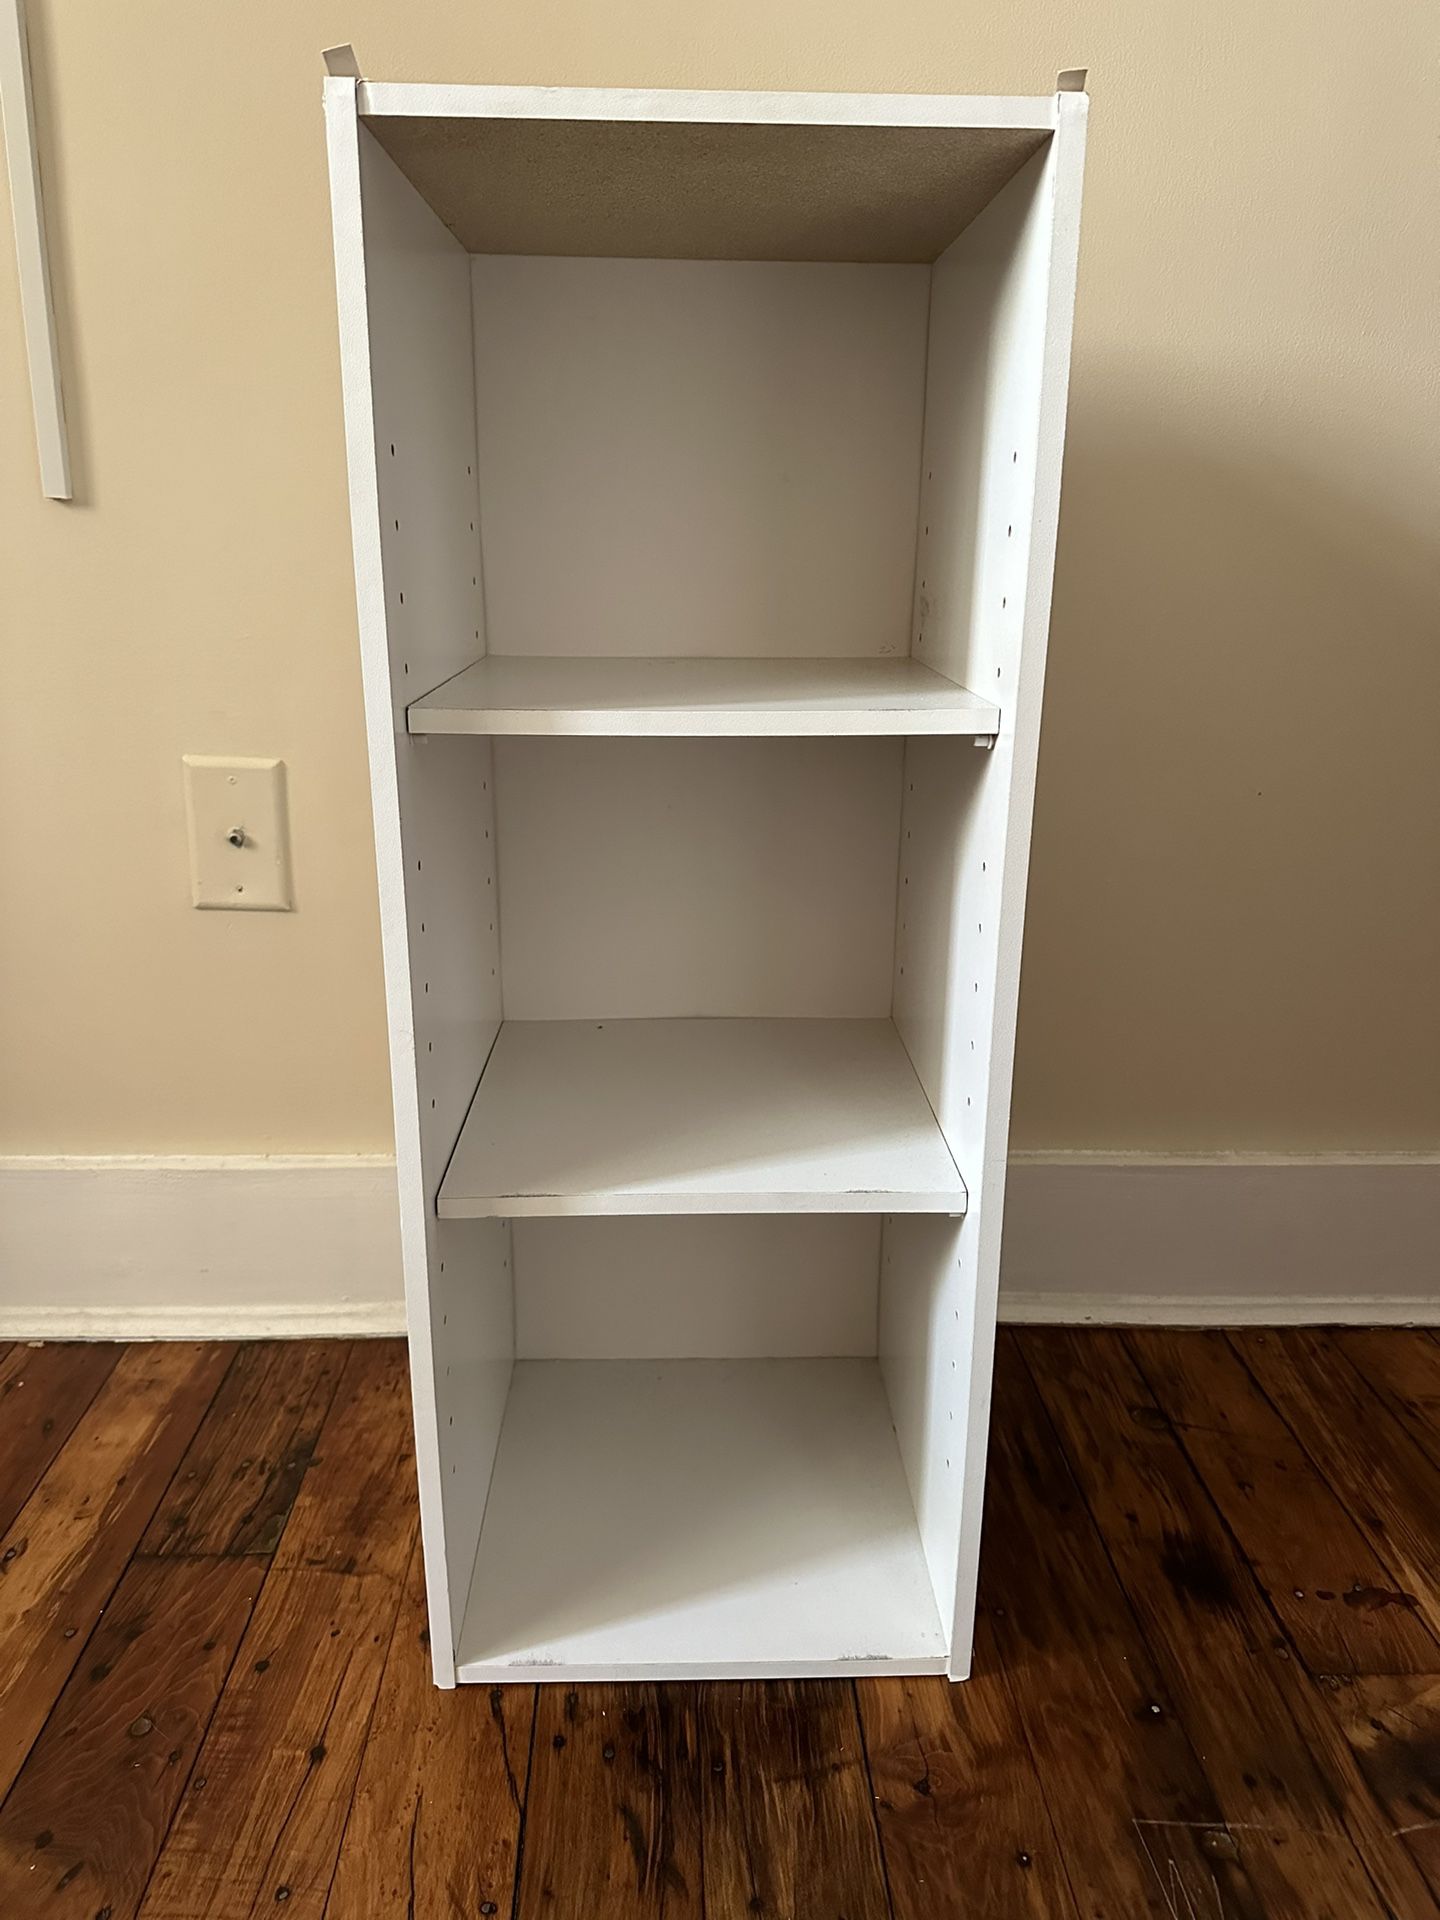 3 Shelf Book Shelf (adjustable)